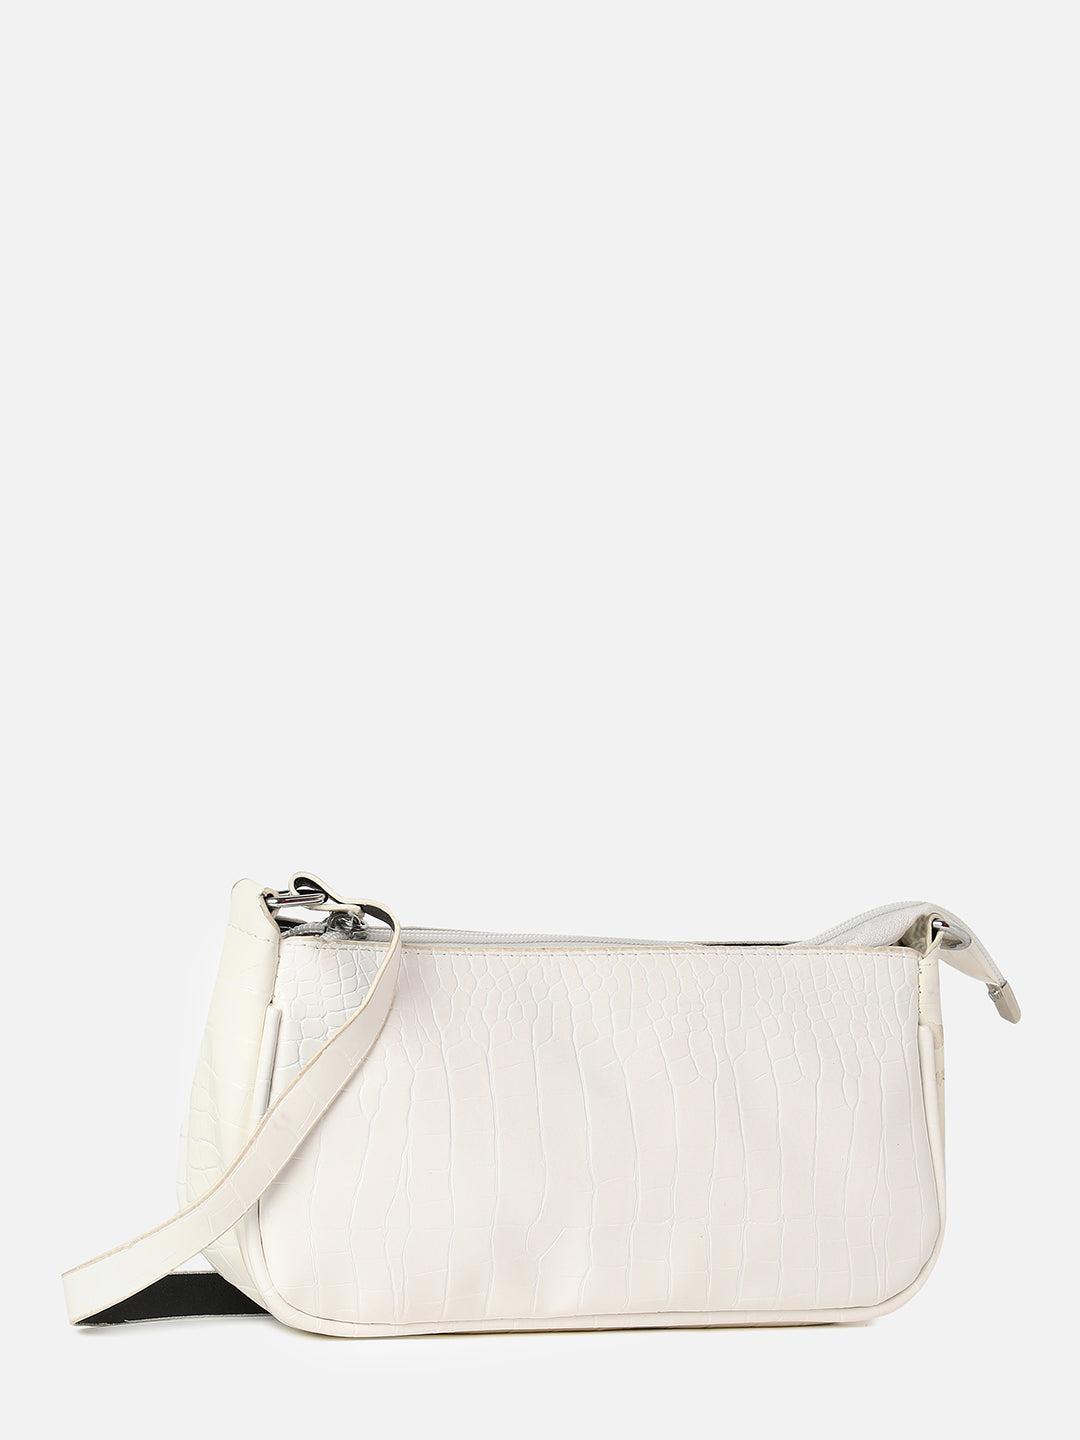 Celeste White Handbag